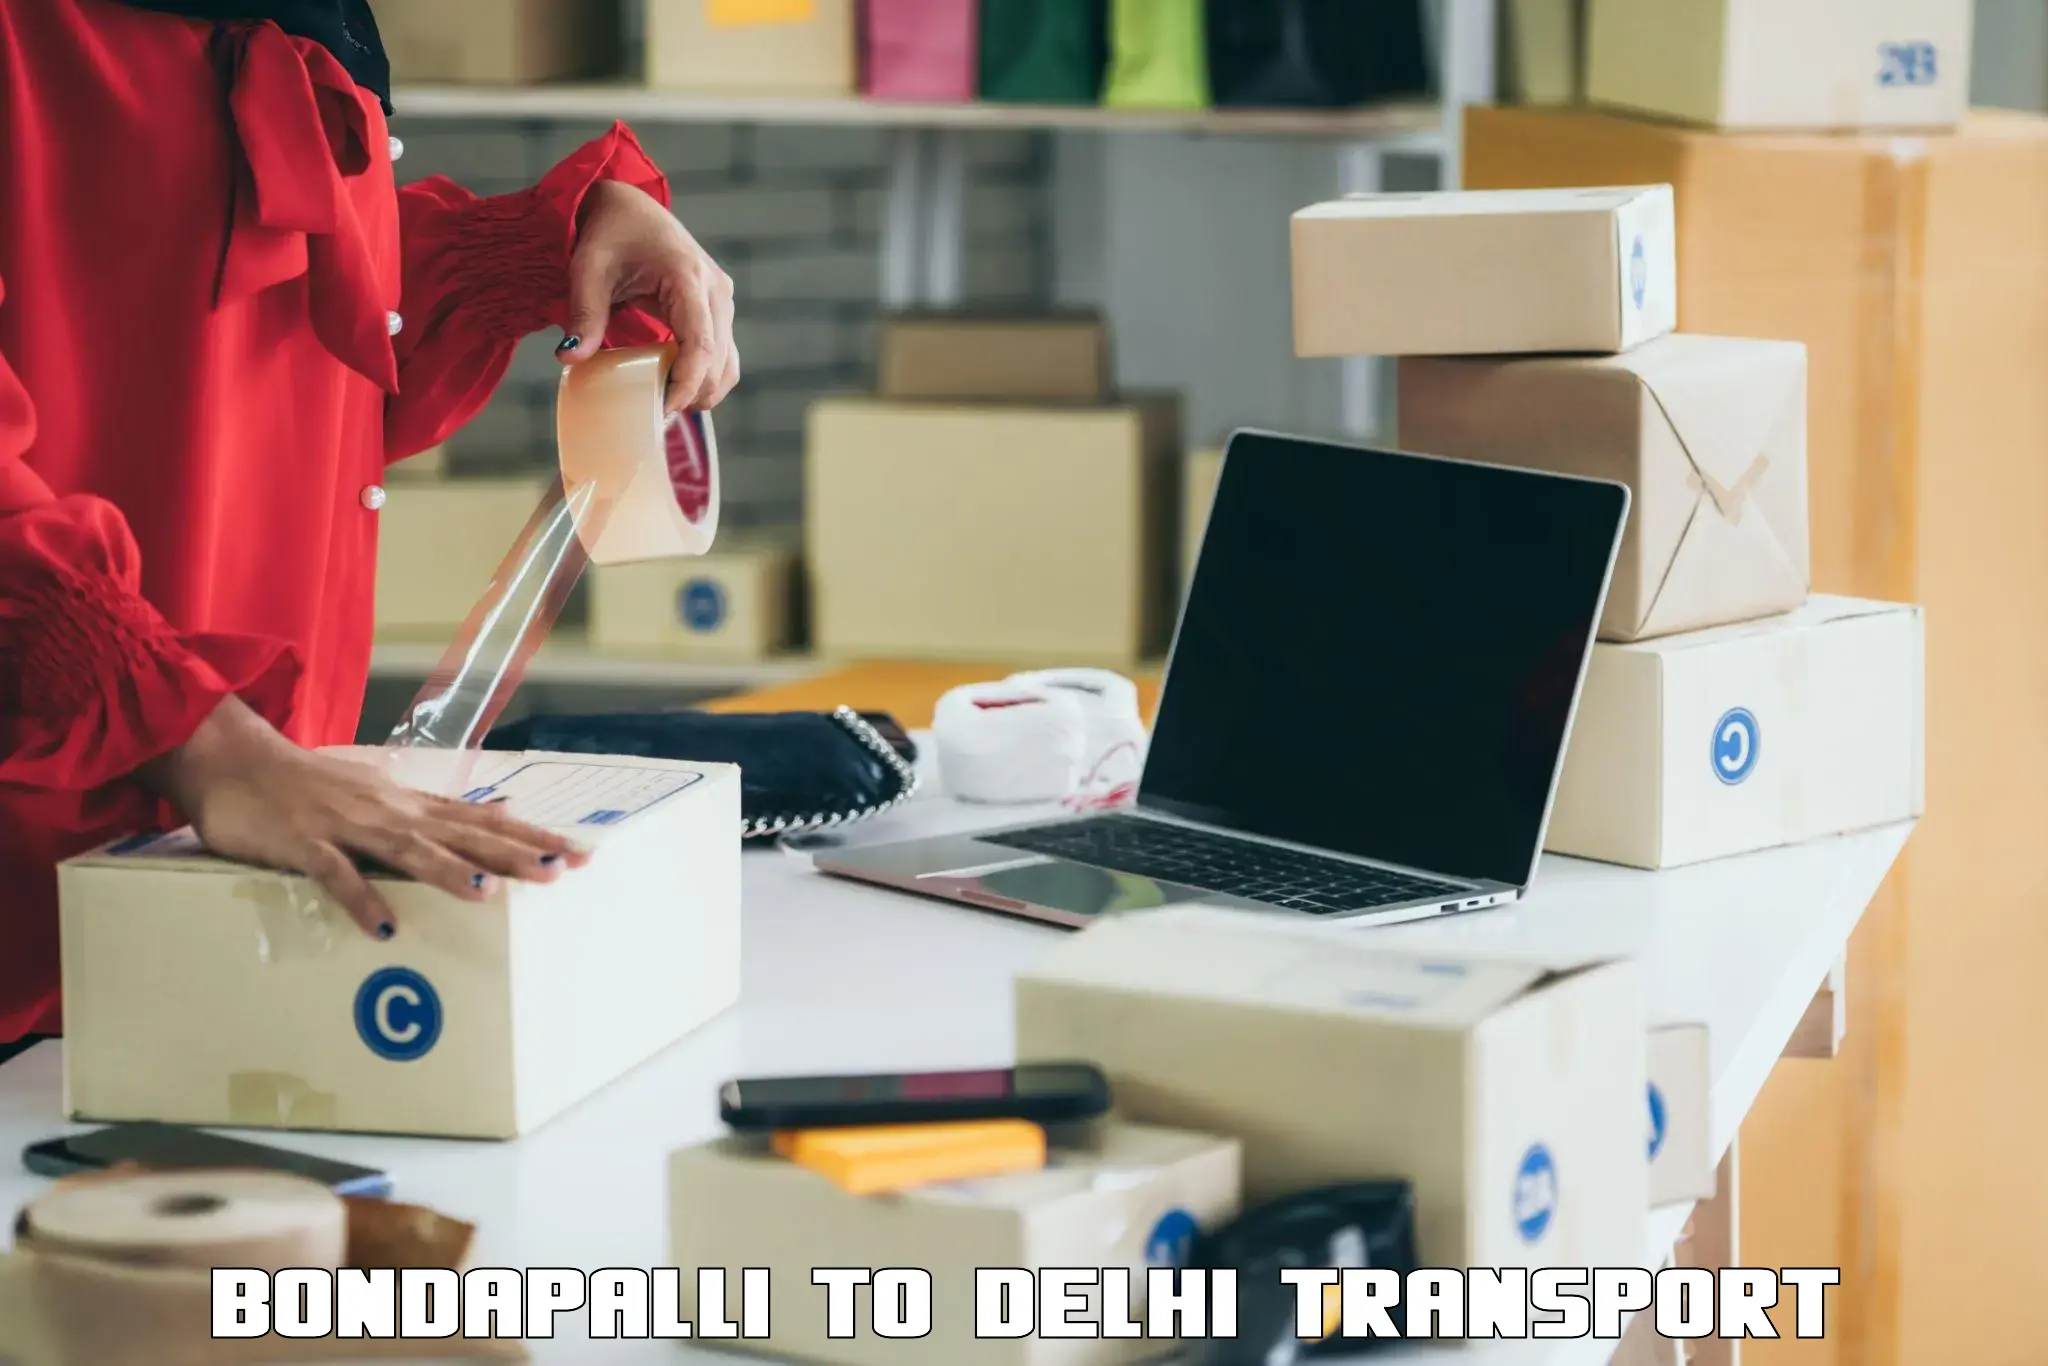 Transport in sharing Bondapalli to Delhi